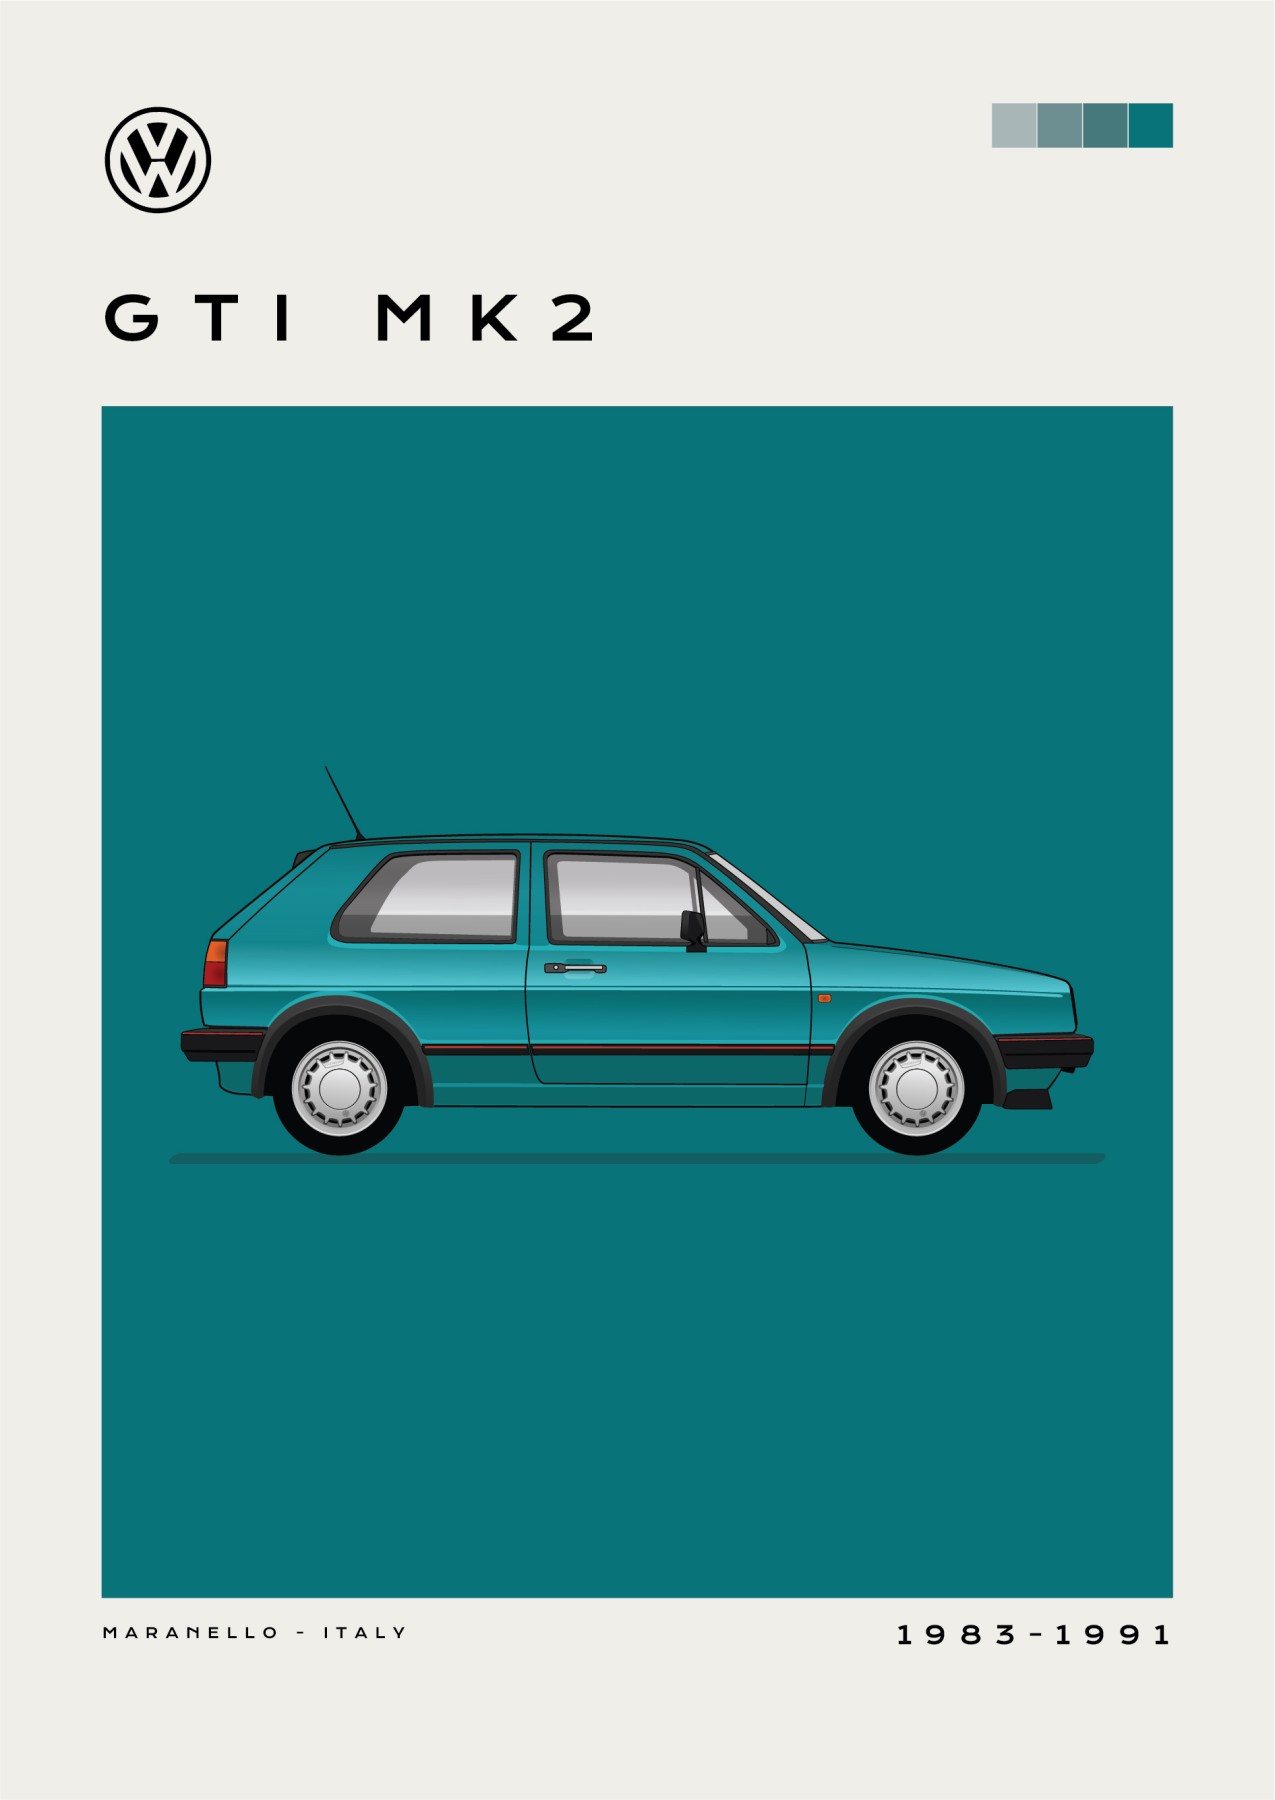 Volkswagen - GTI MK2 - Green